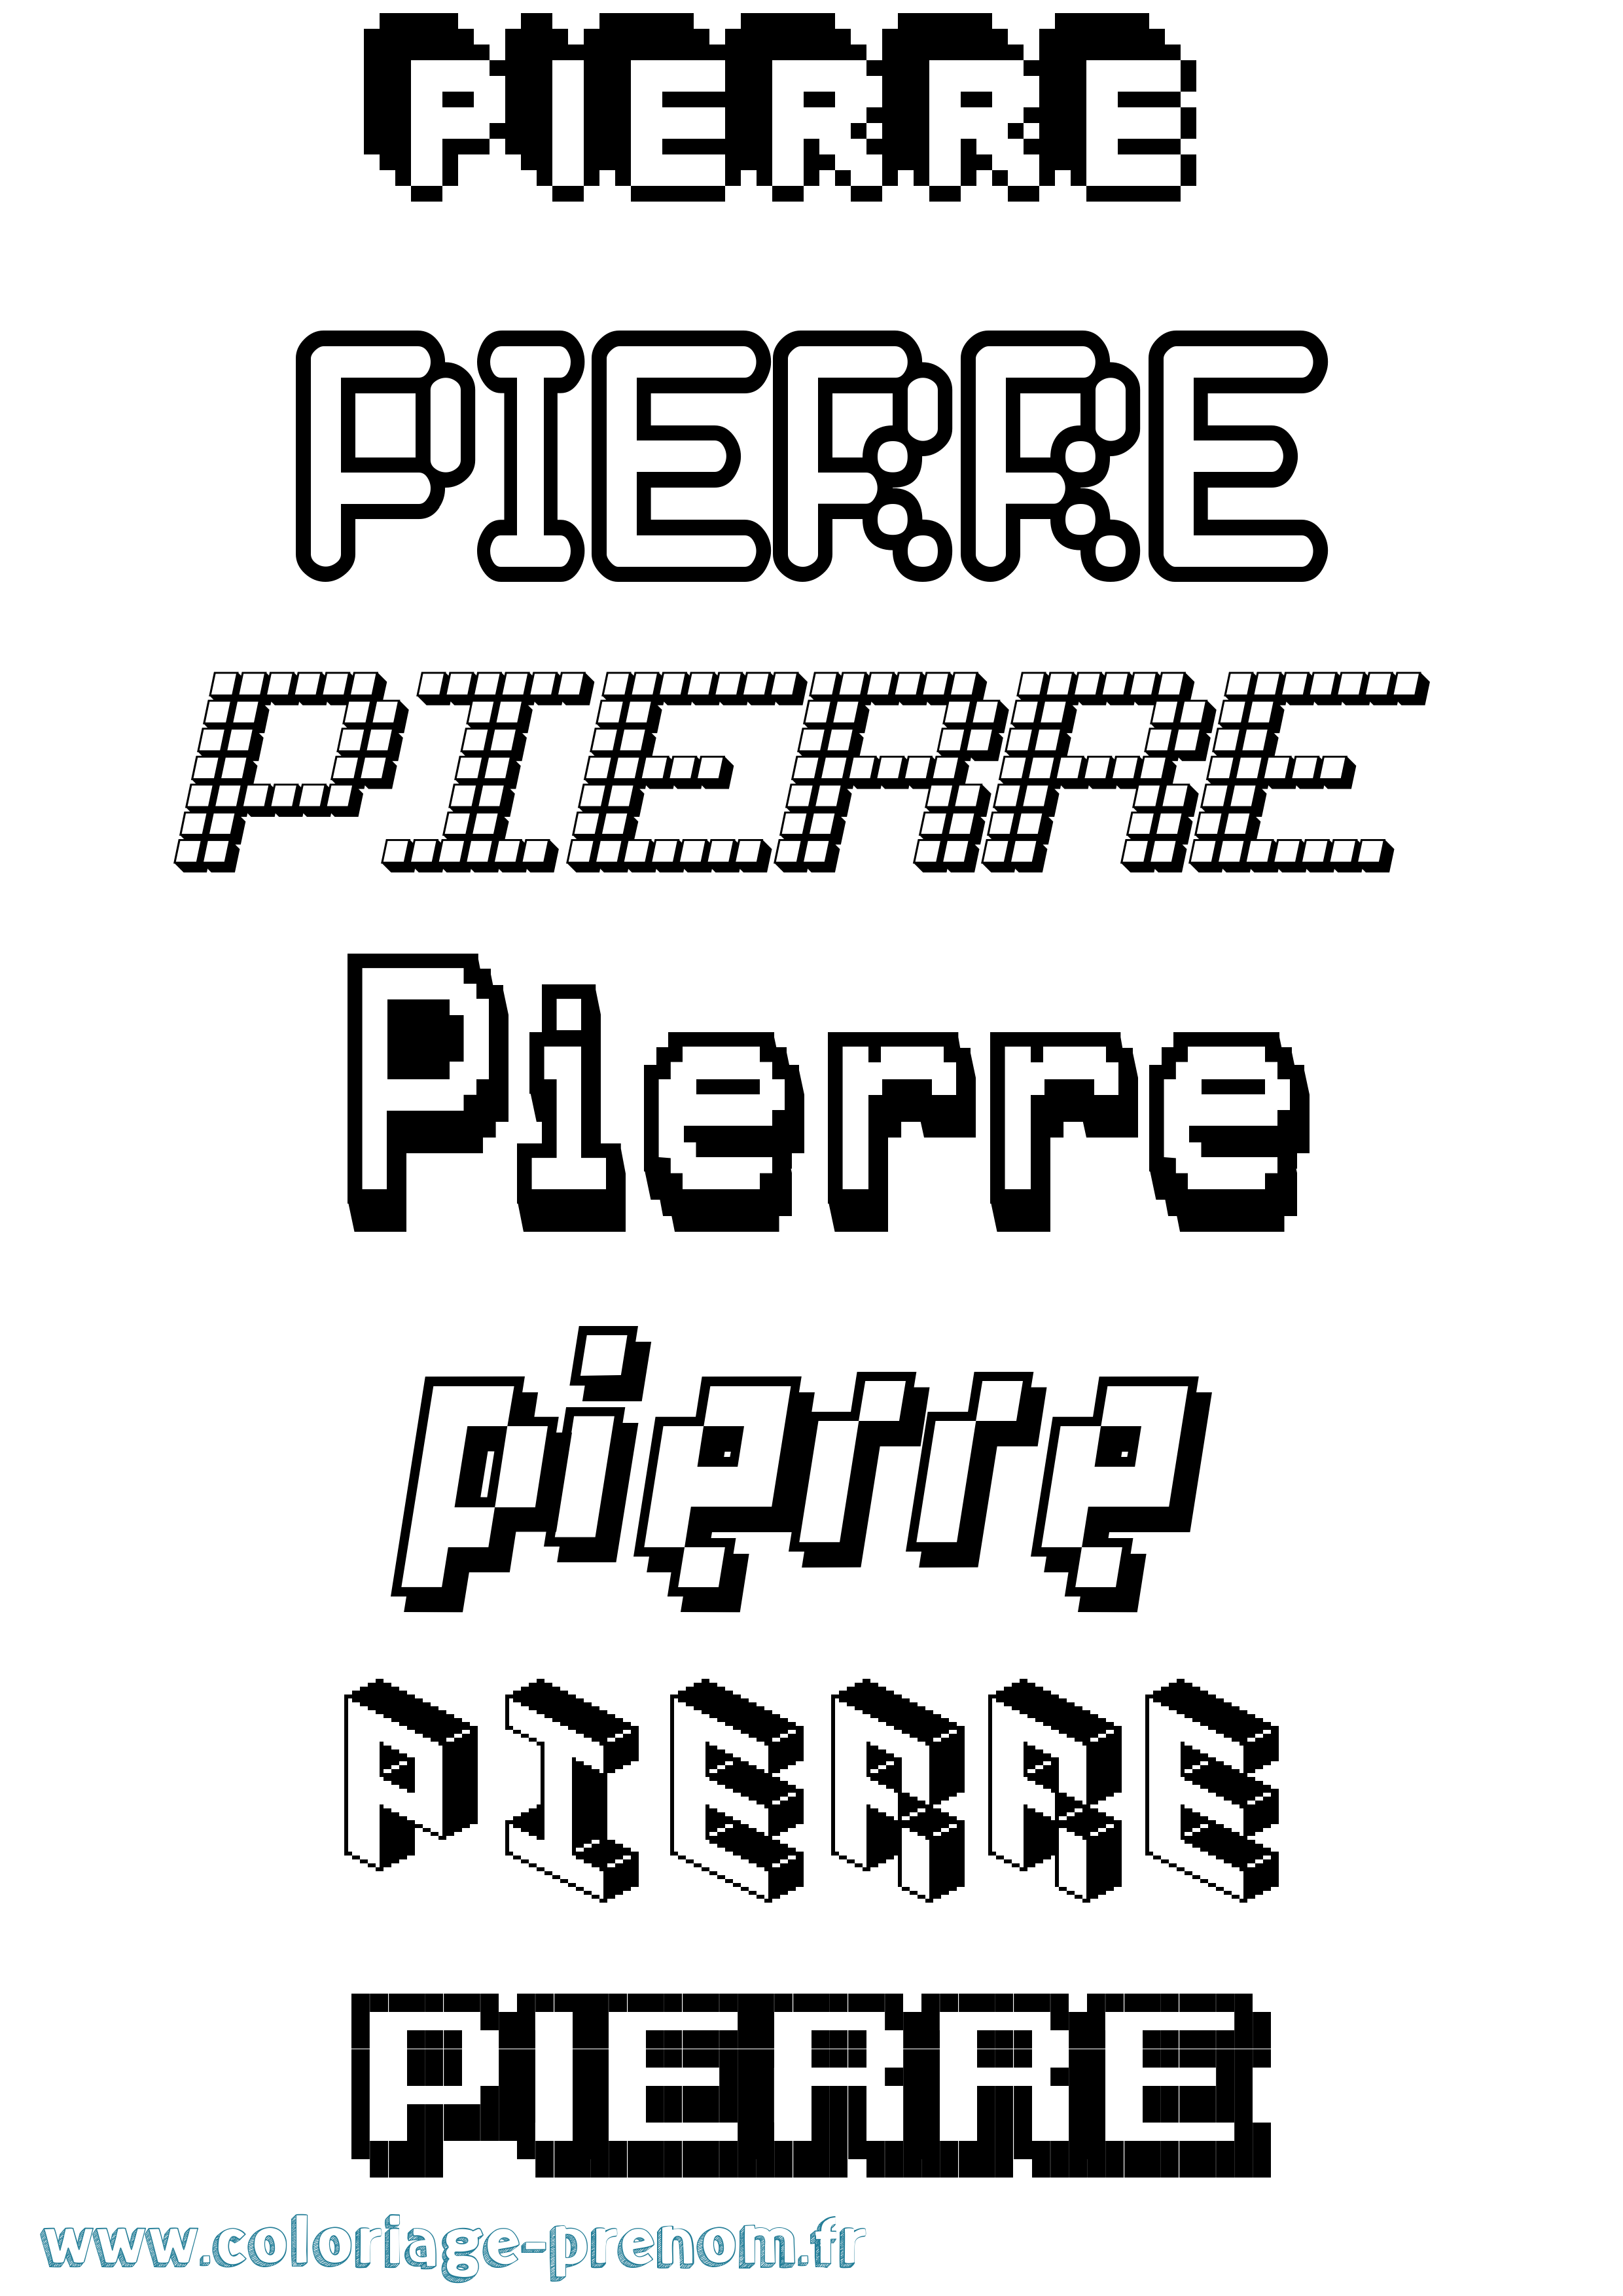 Coloriage prénom Pierre